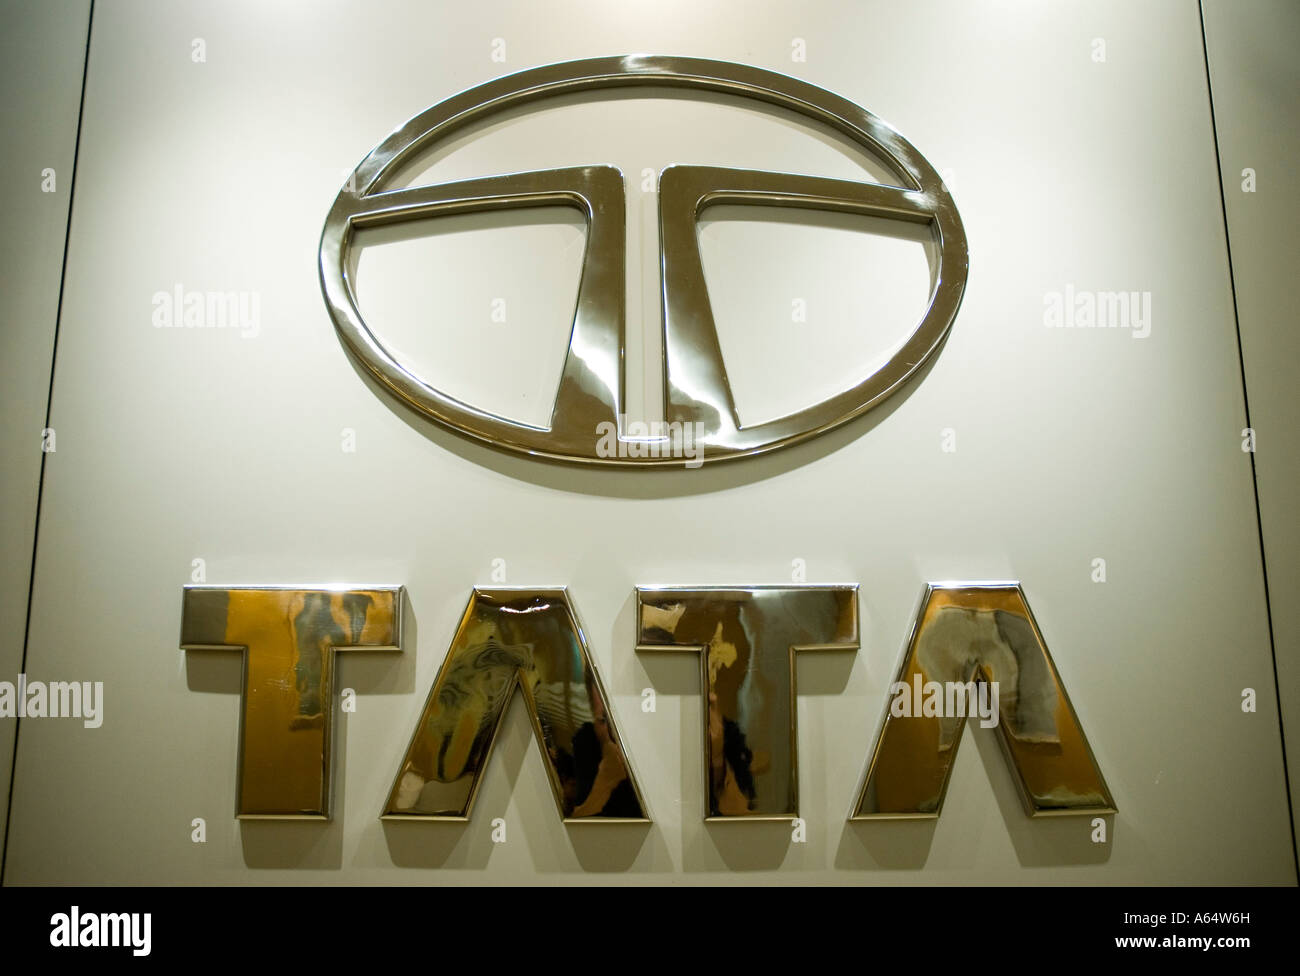 Tata logo sign Stock Photo